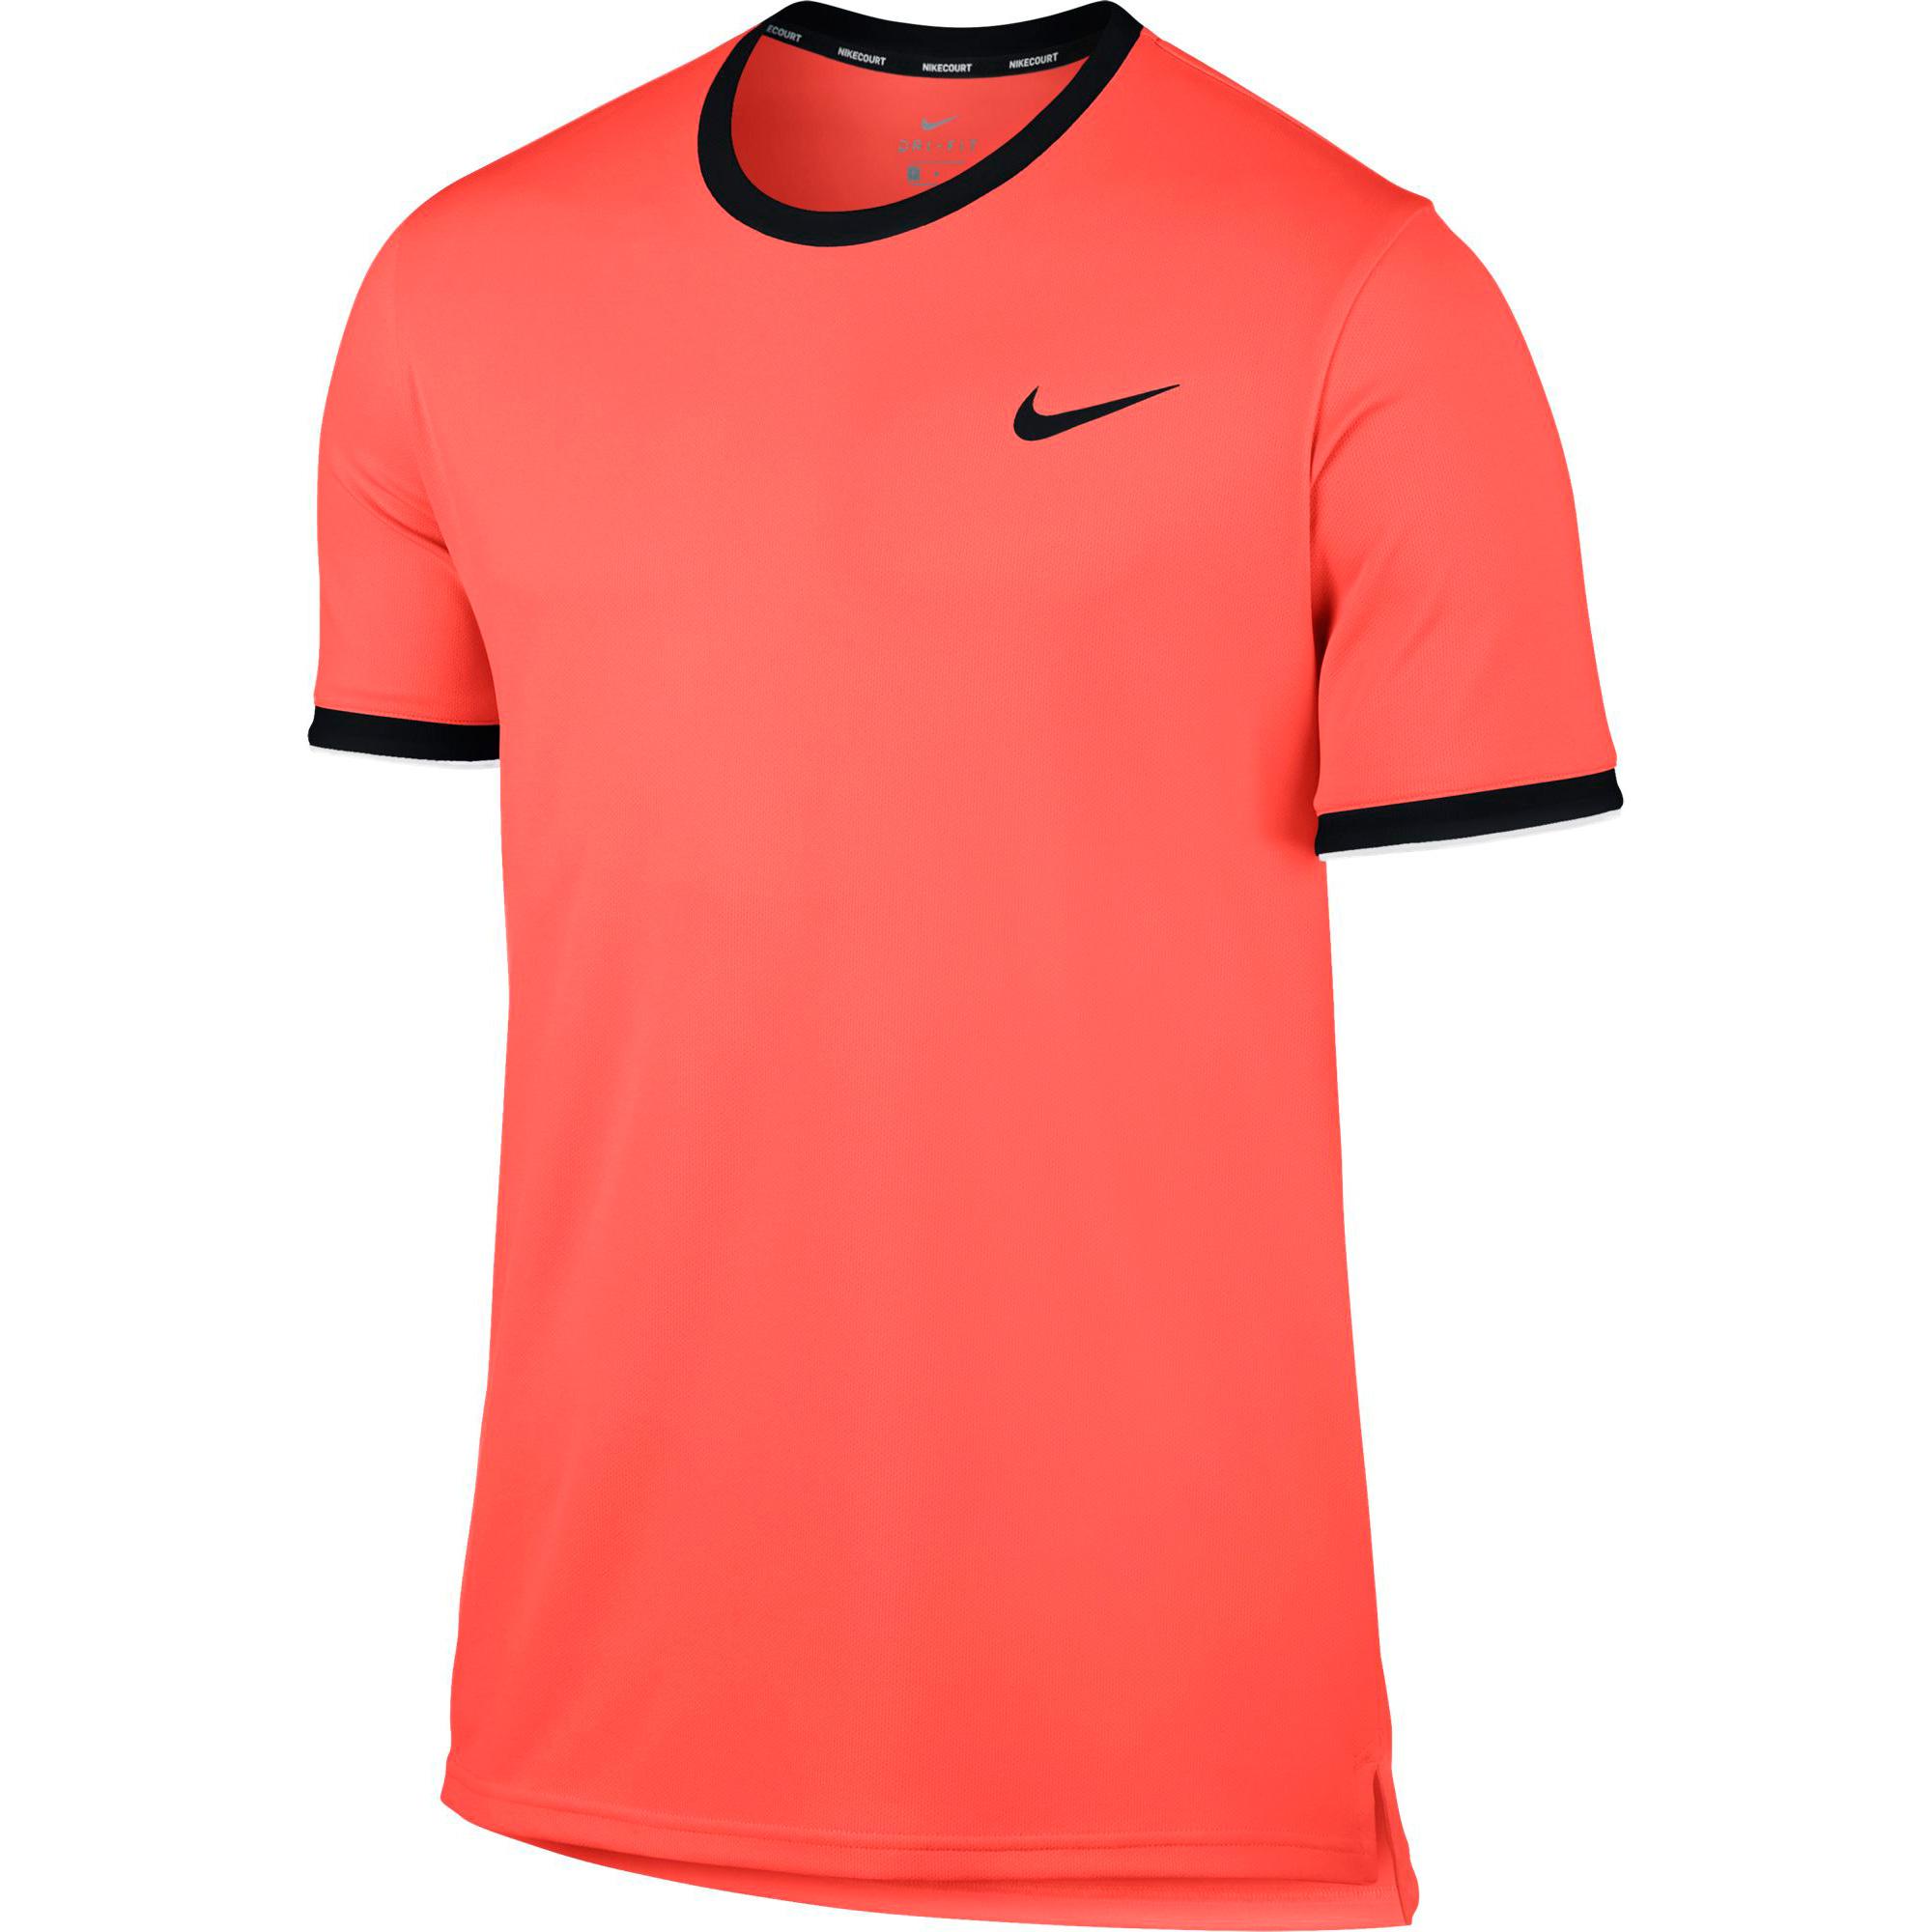 Nike Mens Court Dry Tennis Top - Hyper Orange - Tennisnuts.com